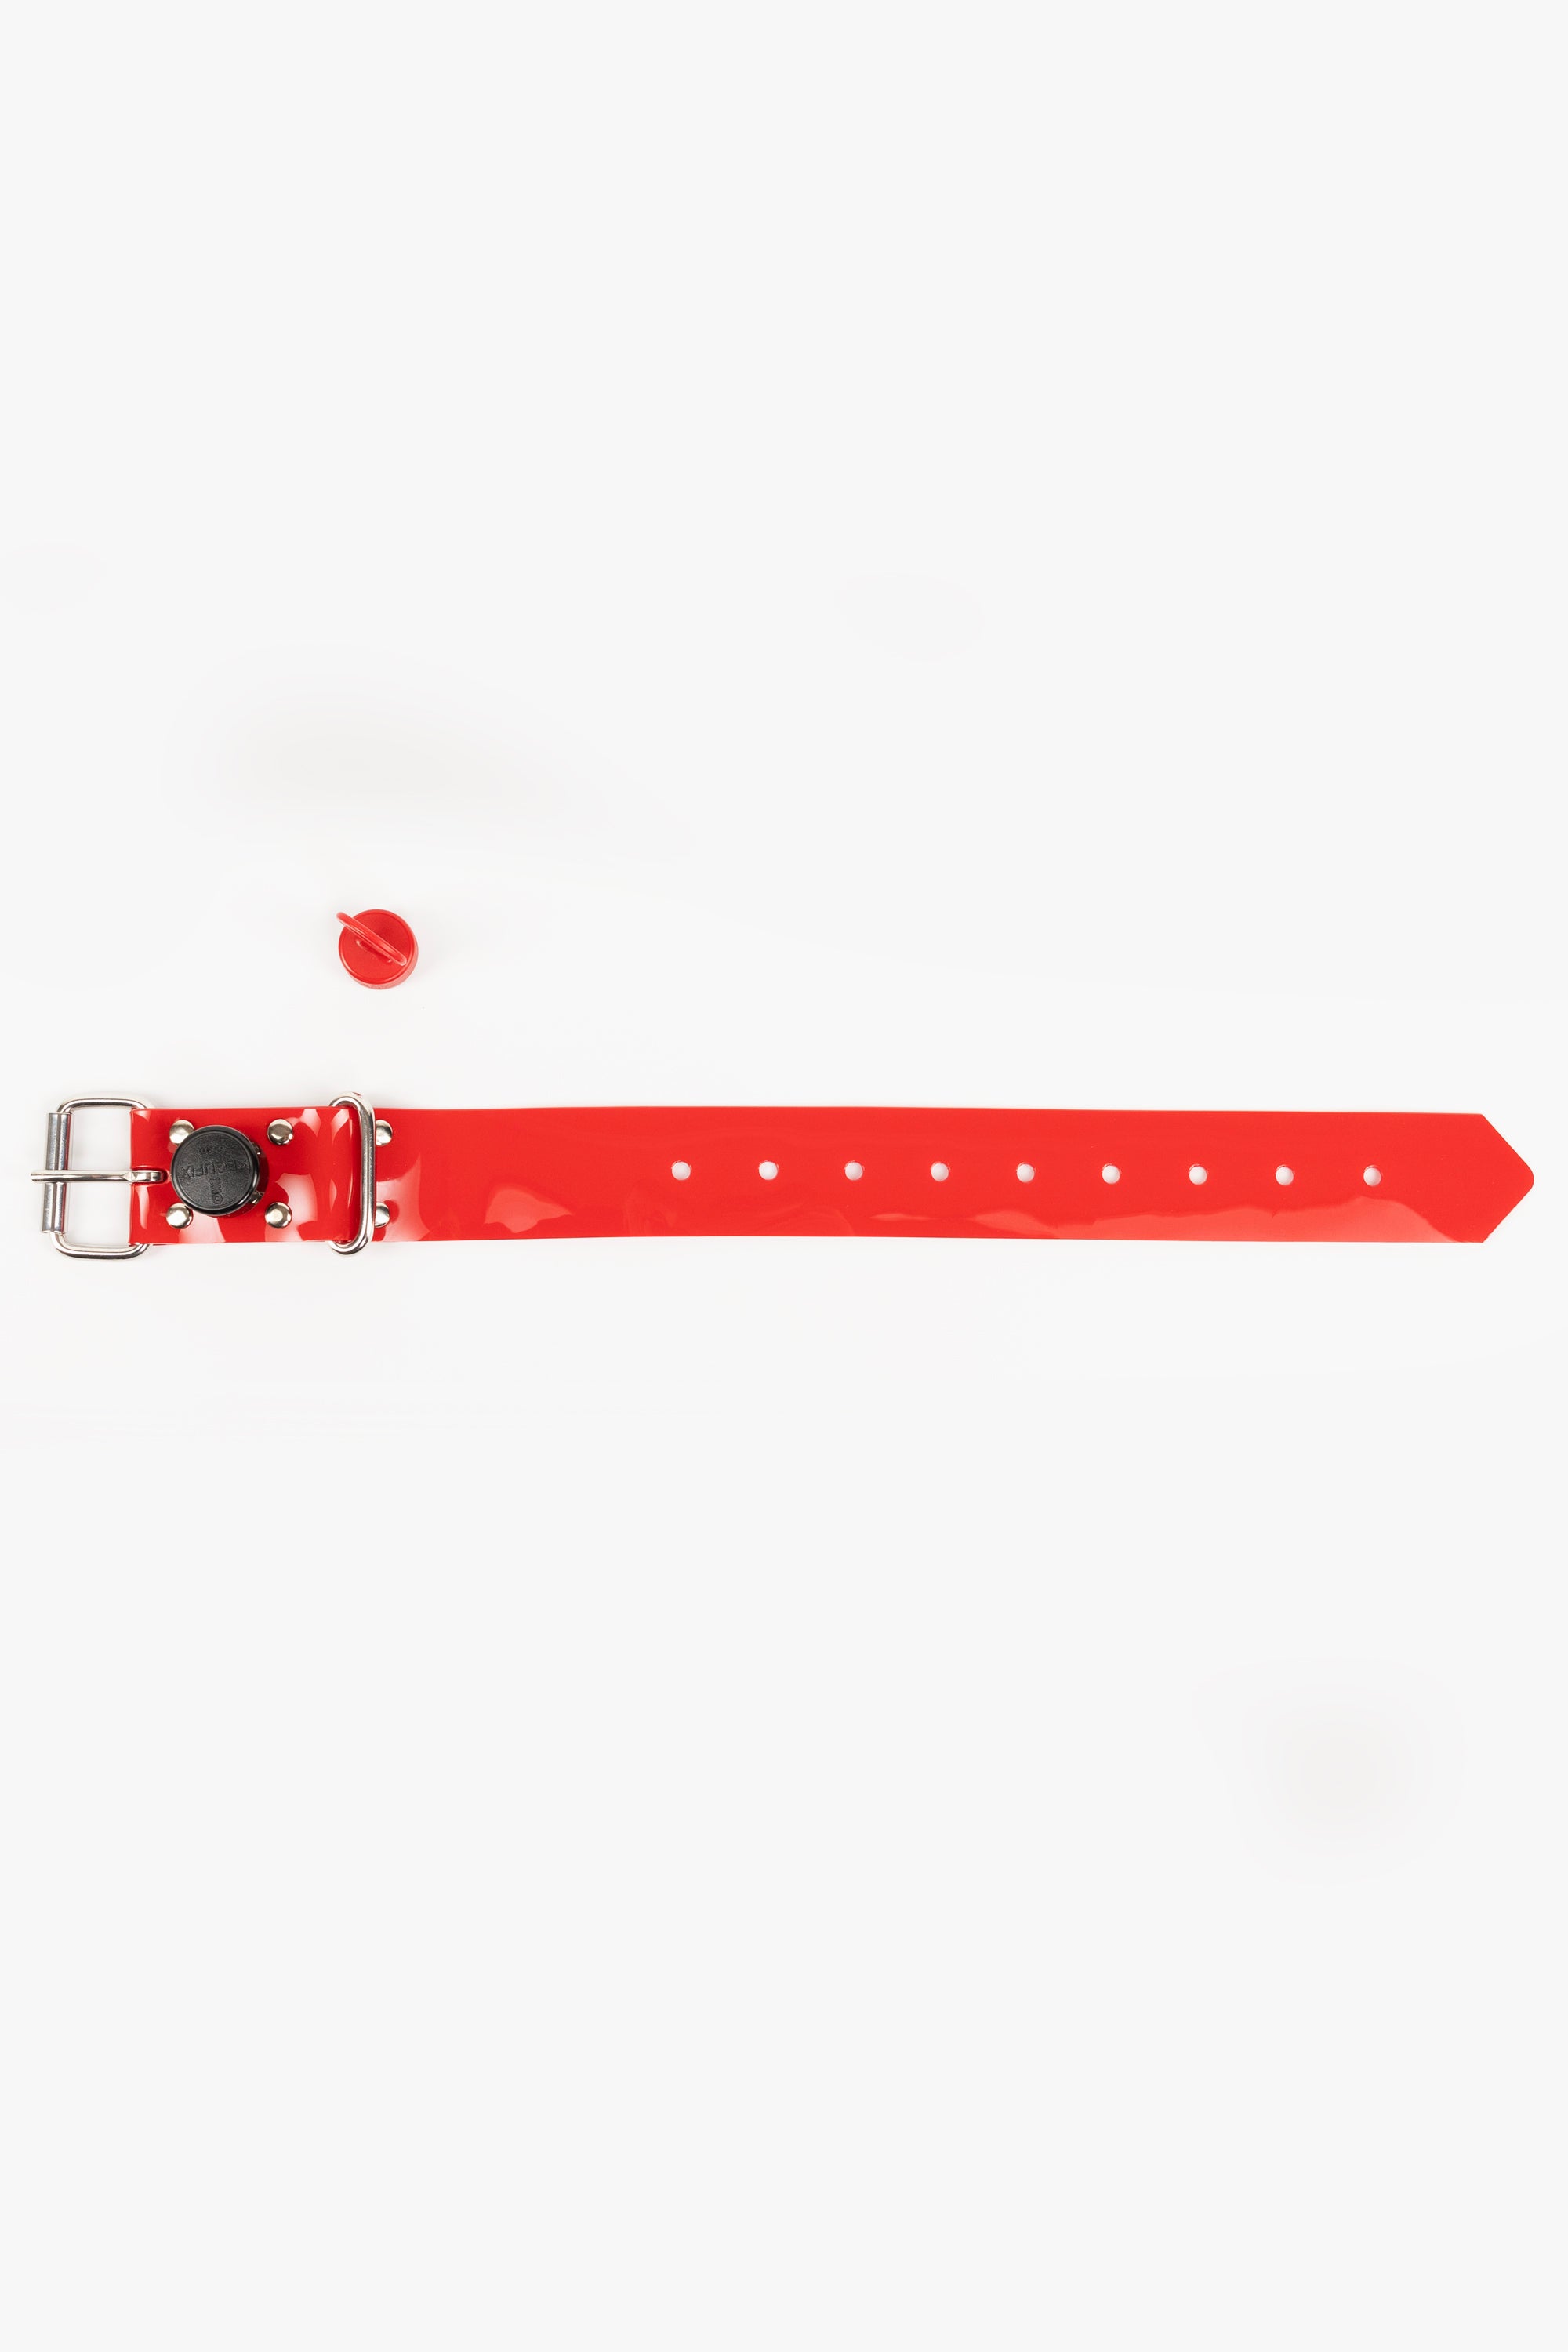 Bondage lockable segufix straps set 40 mm, red/chrome